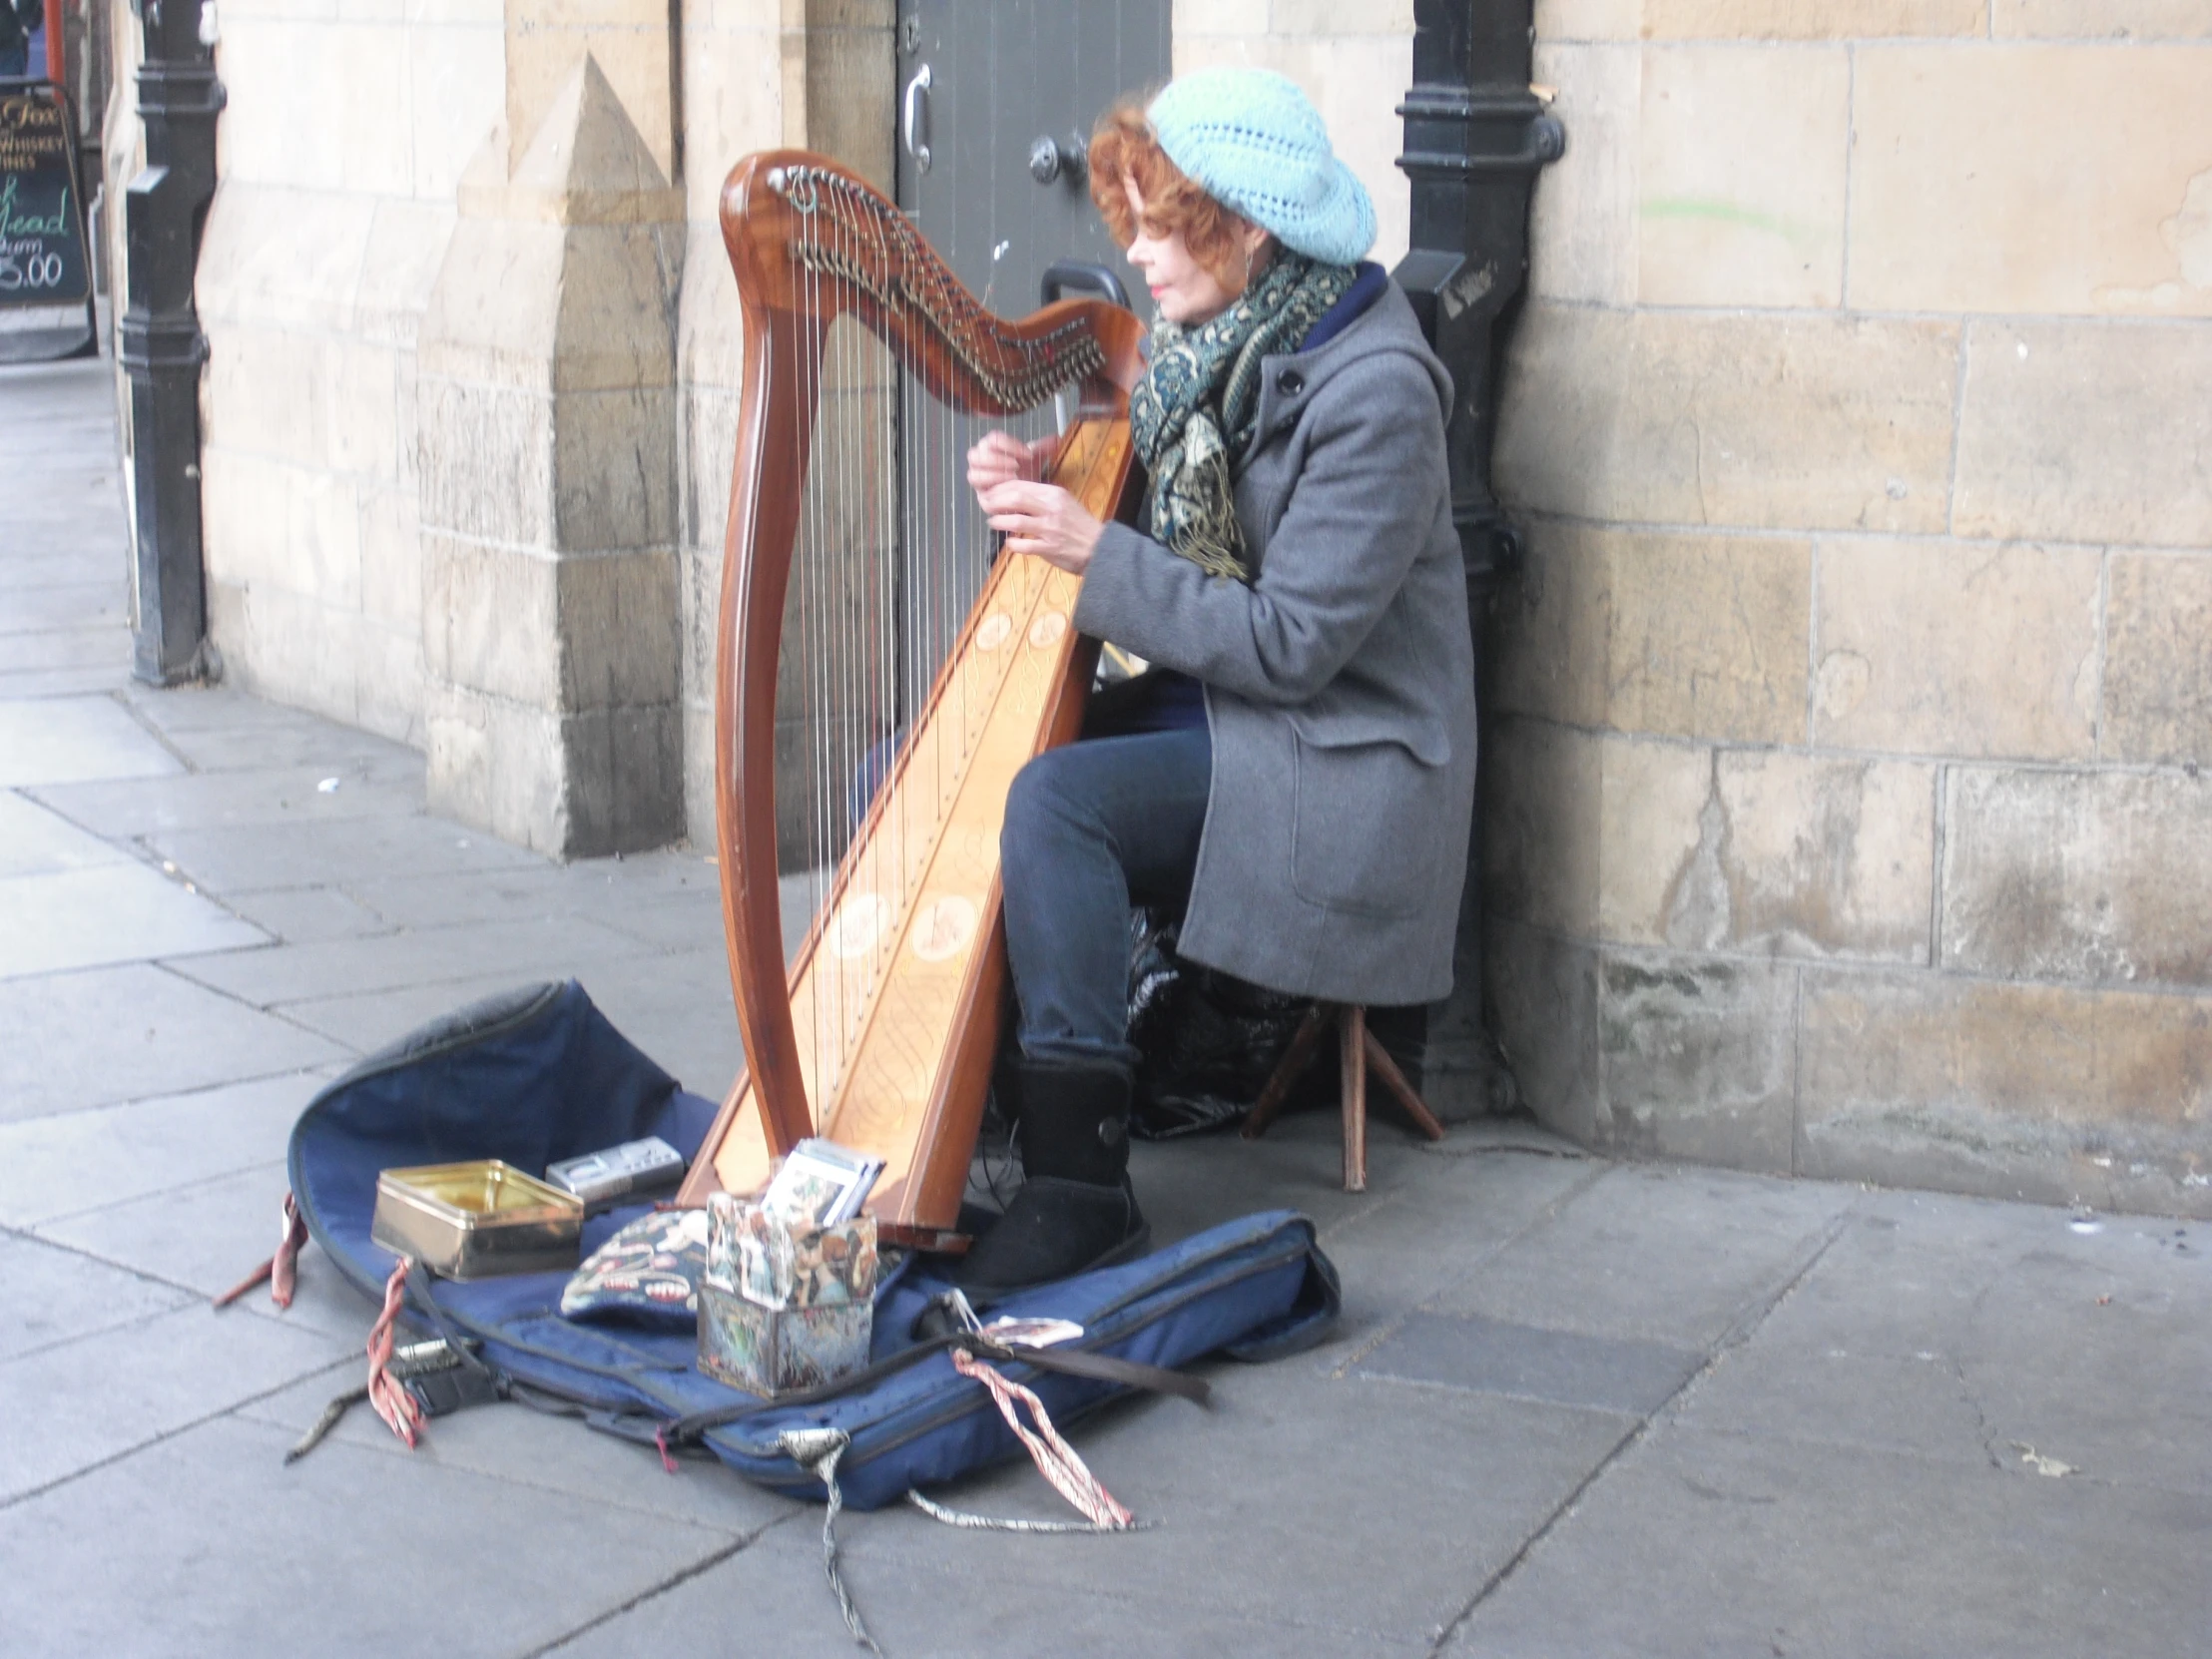 a woman plays an instrument near a building